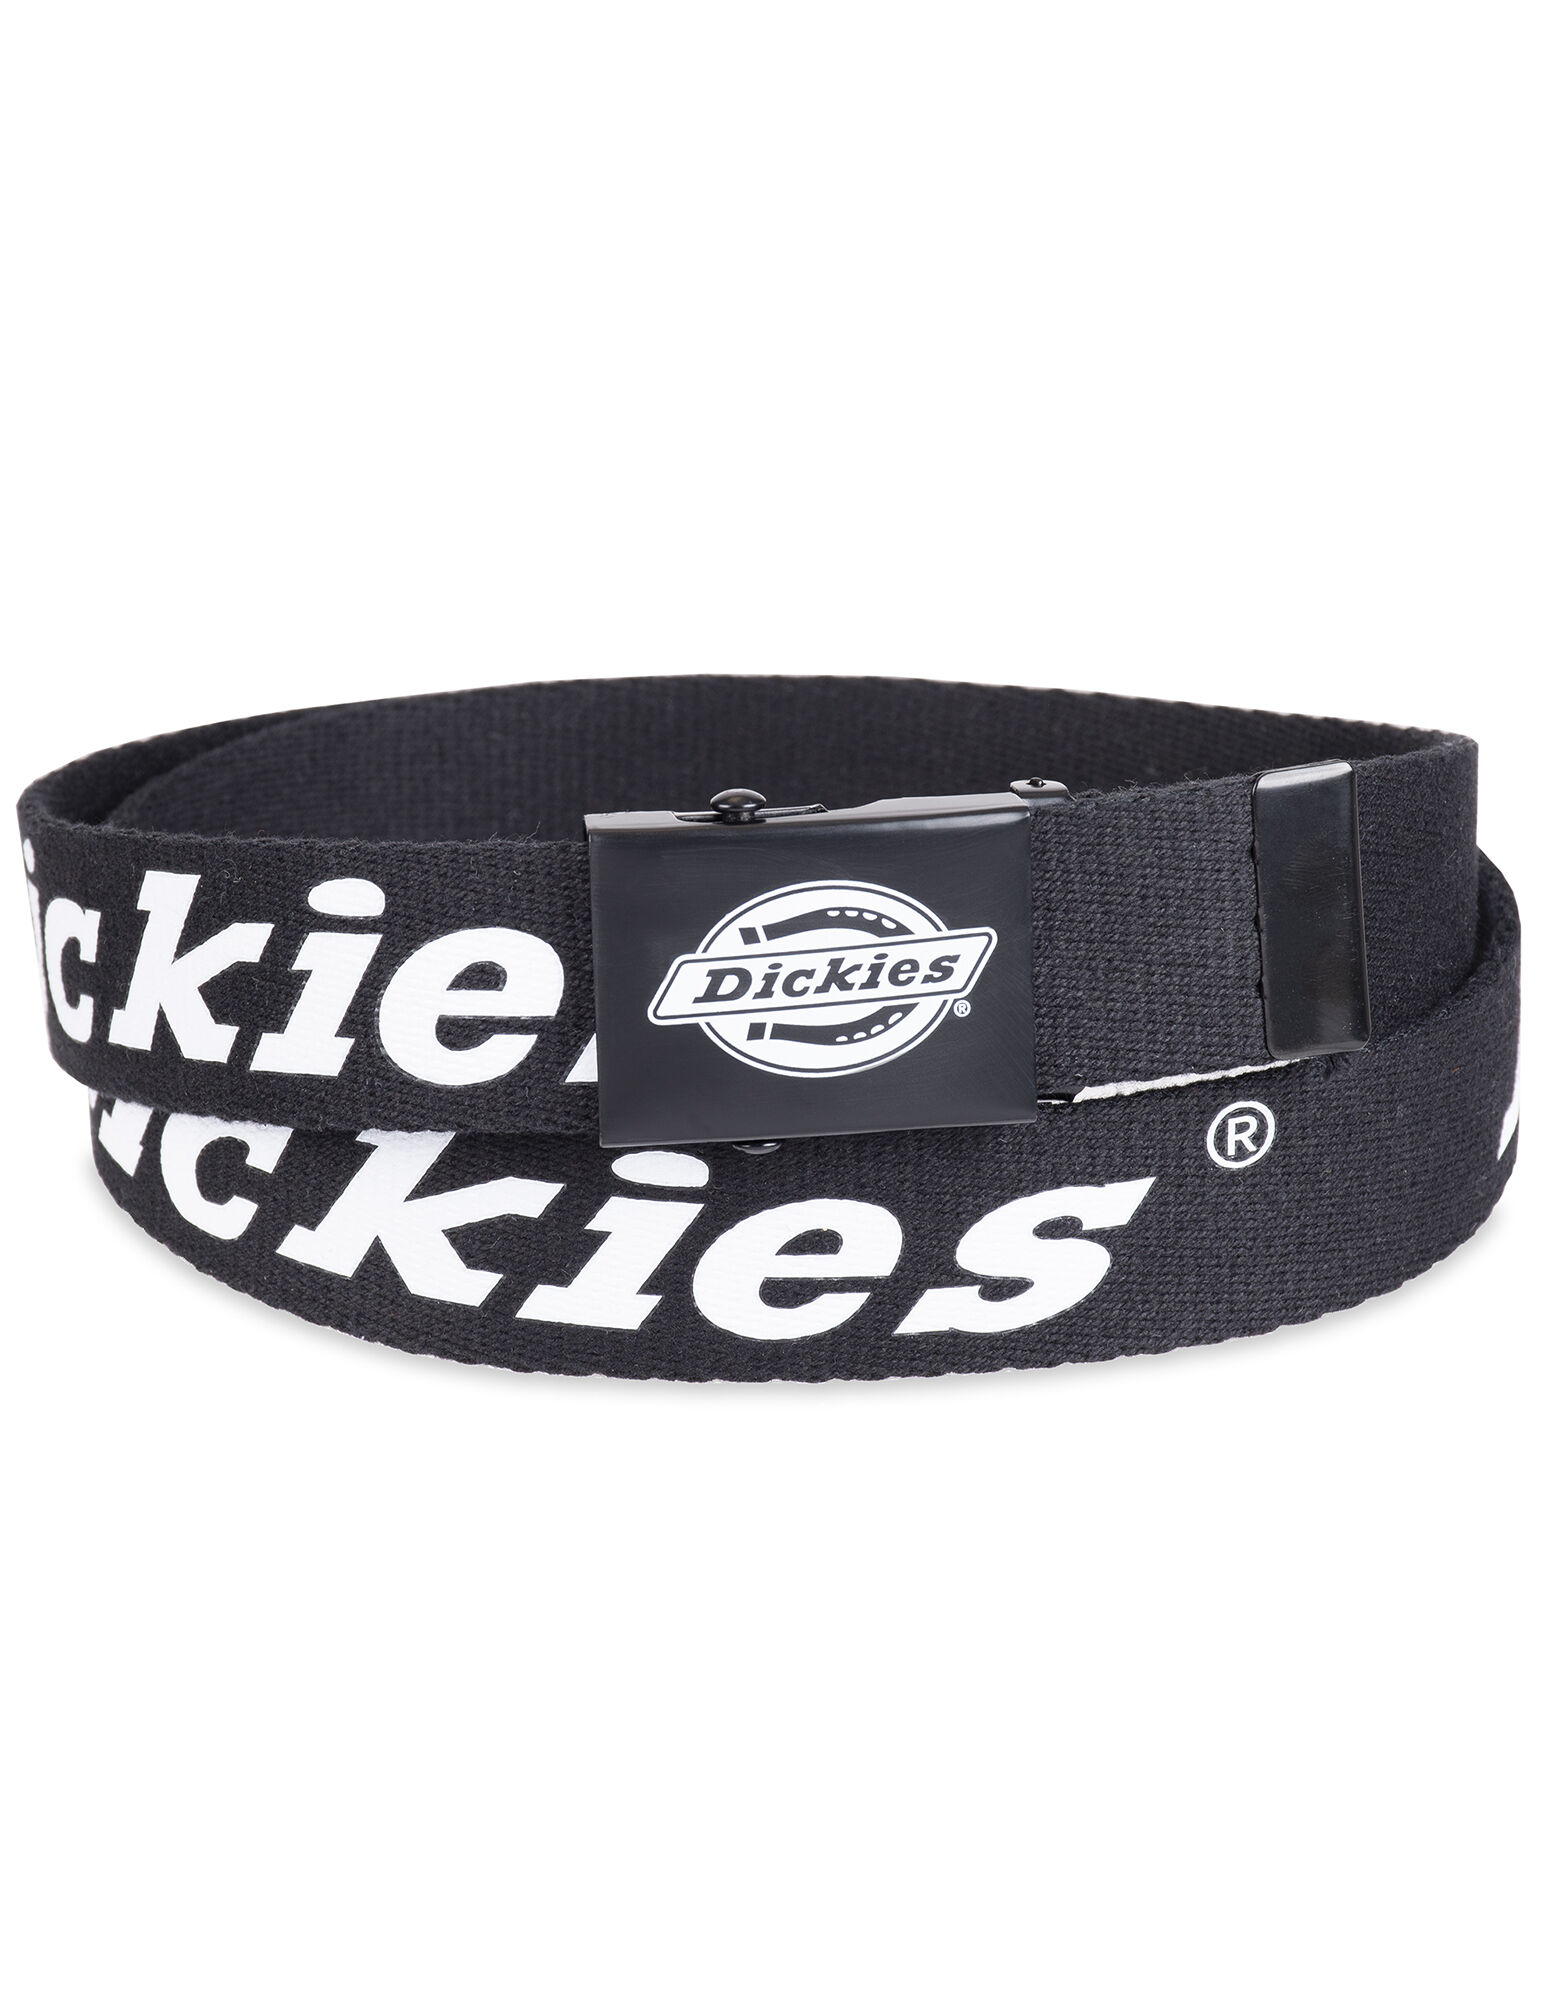 Dickies Men/'s Belt with Logo Stamp